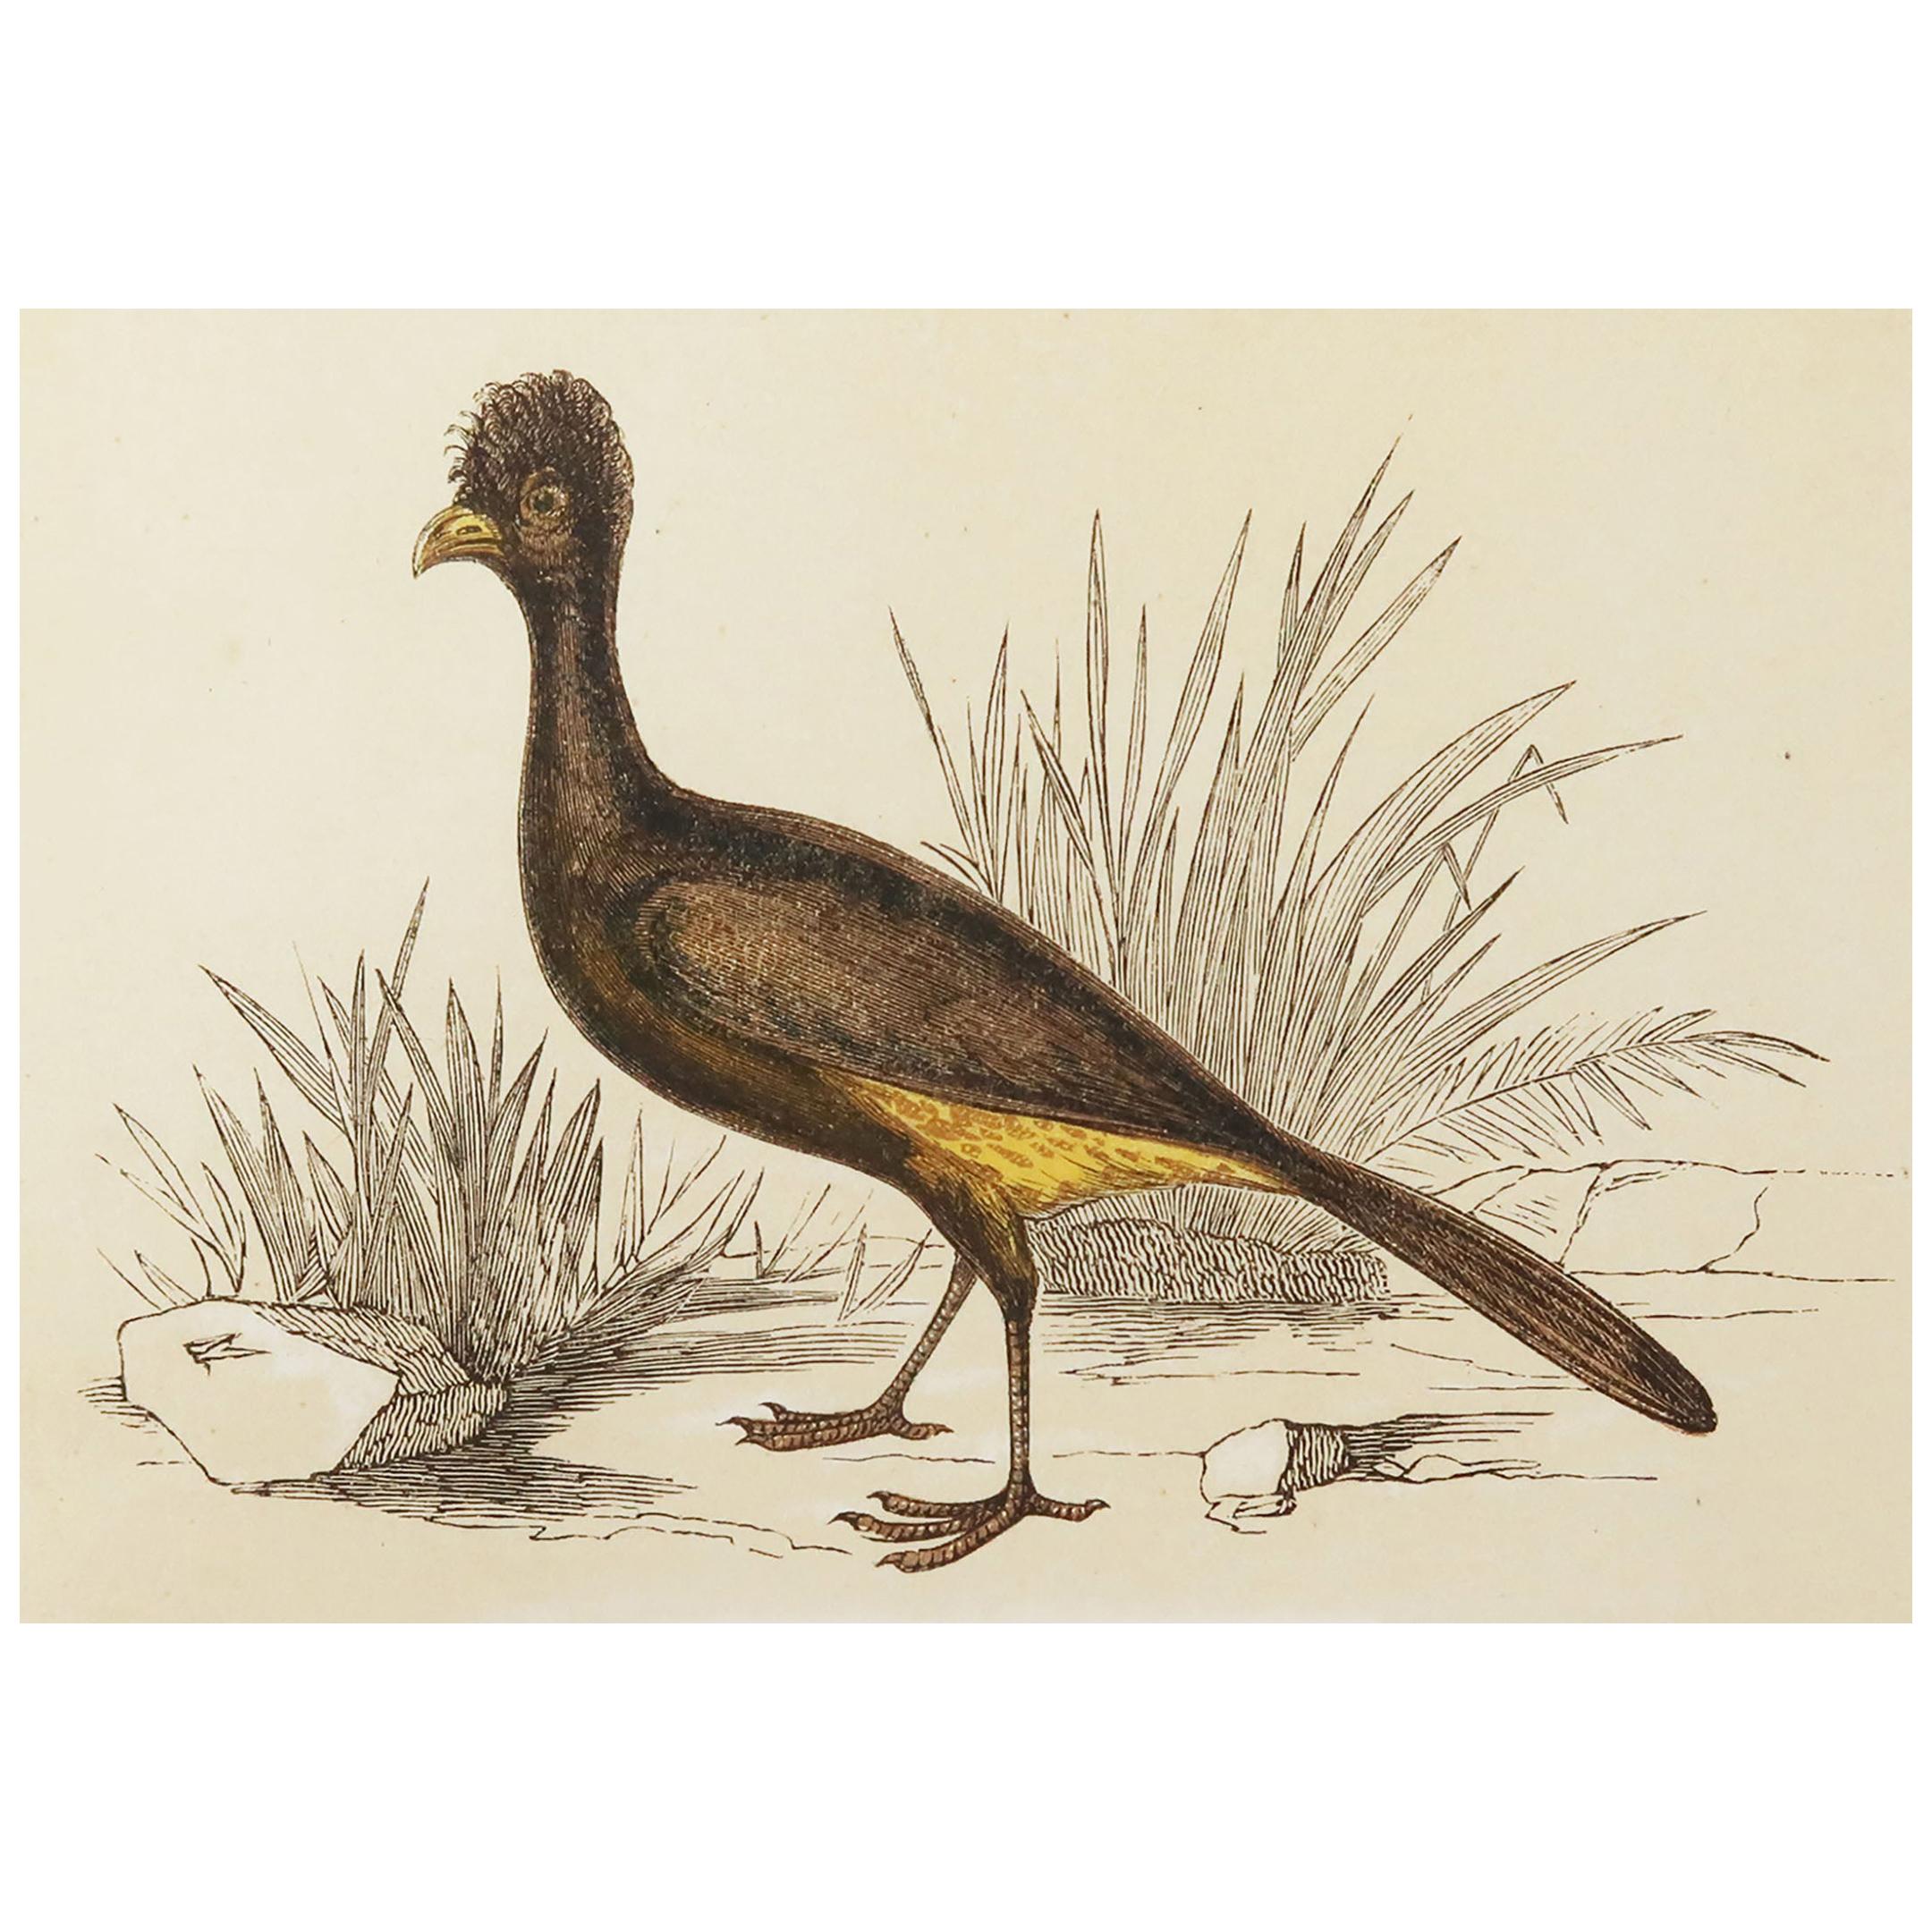 Original Antique Bird Print, the Crested Curassow, Tallis, circa 1850